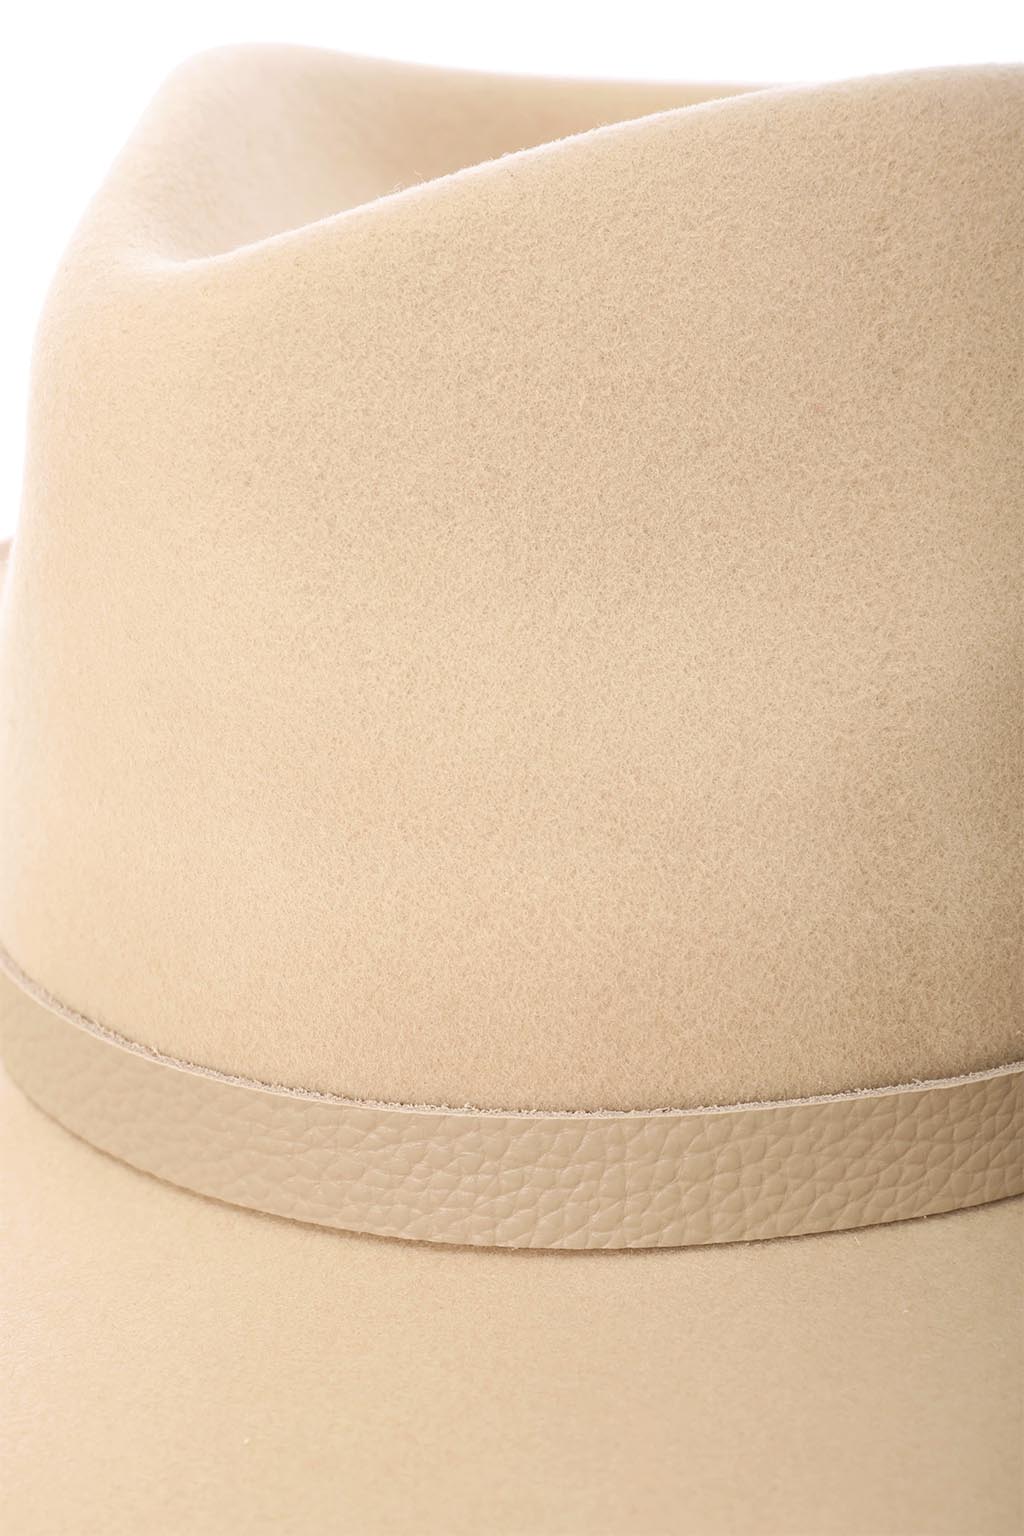 leather-ribbon-fedra-hat-beige-11